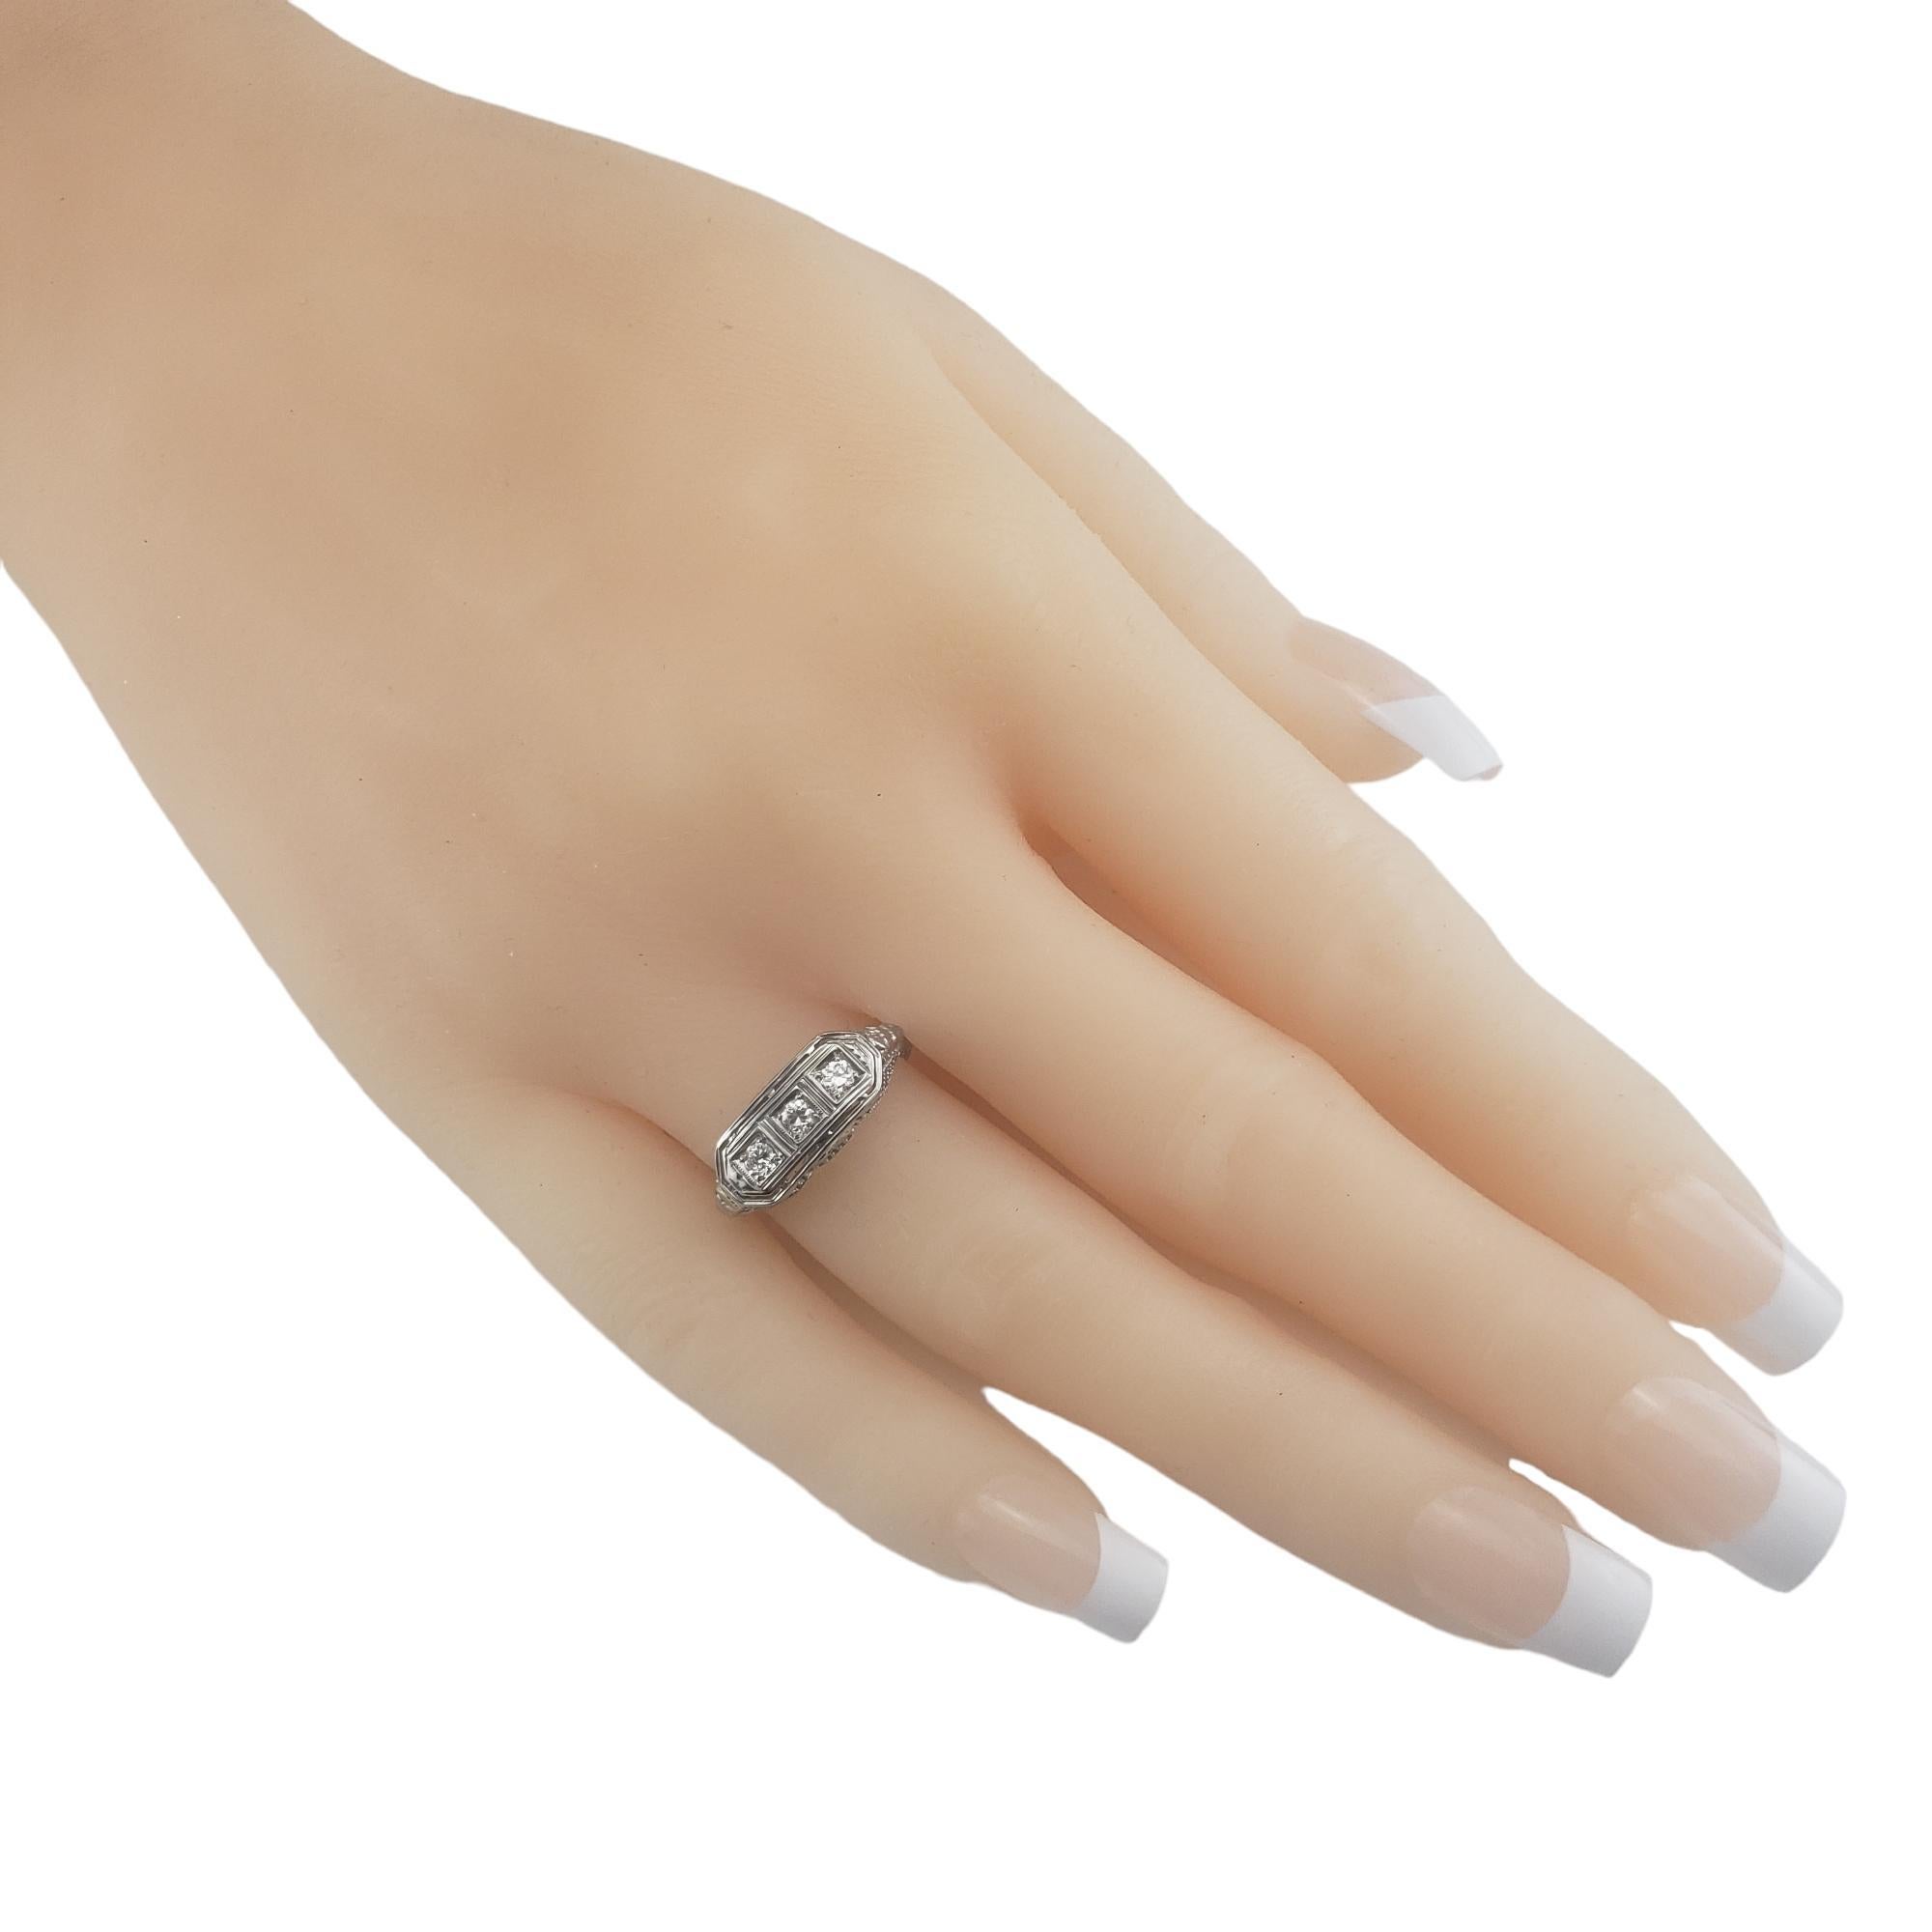 18 Karat White Gold Filigree and Diamond Ring Size 5.5-5.75 #16754 For Sale 2